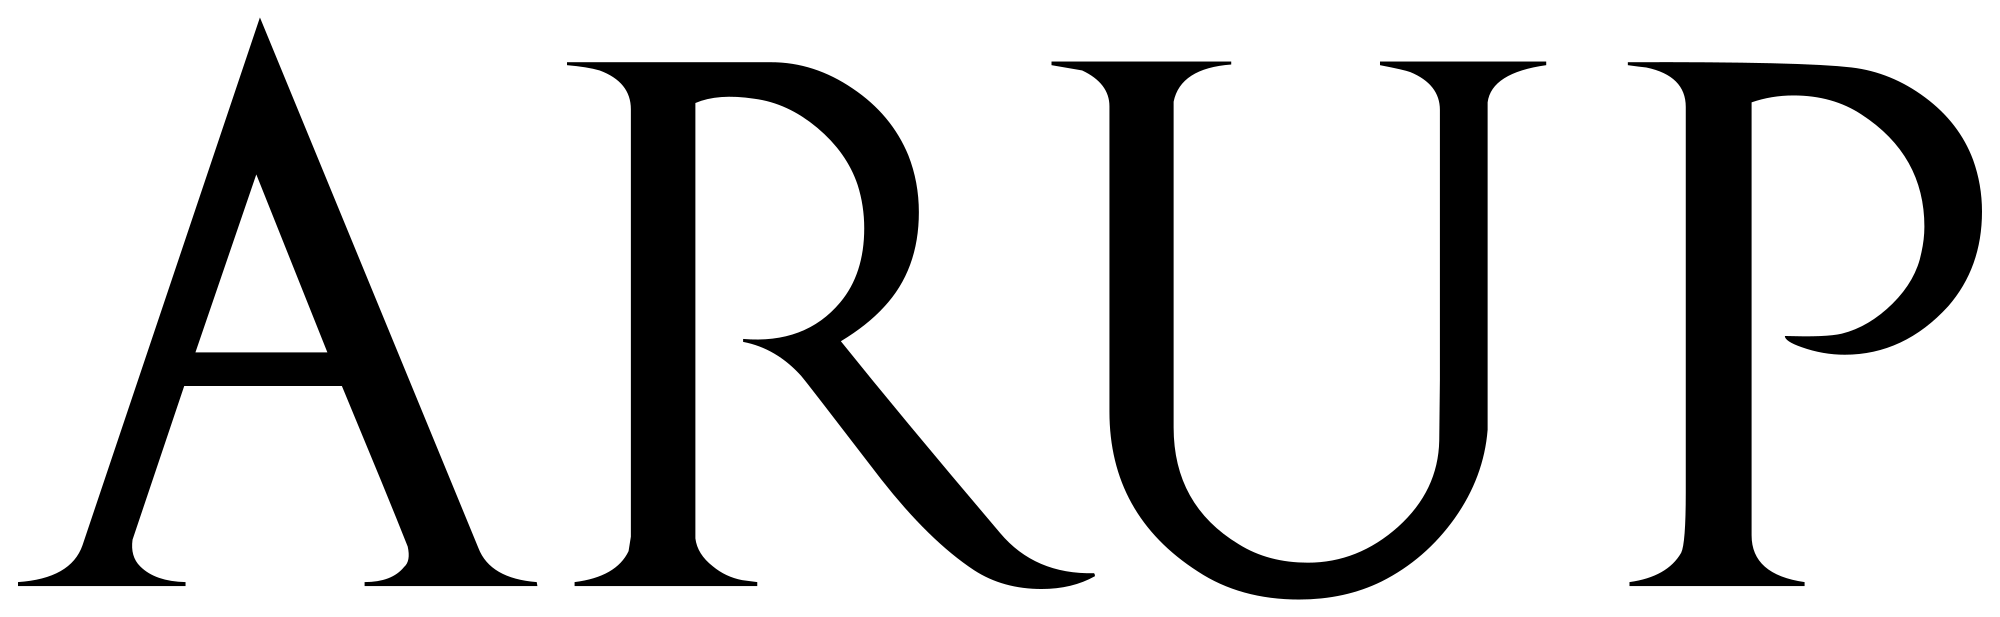 2000px-Arup_logo.svg.png